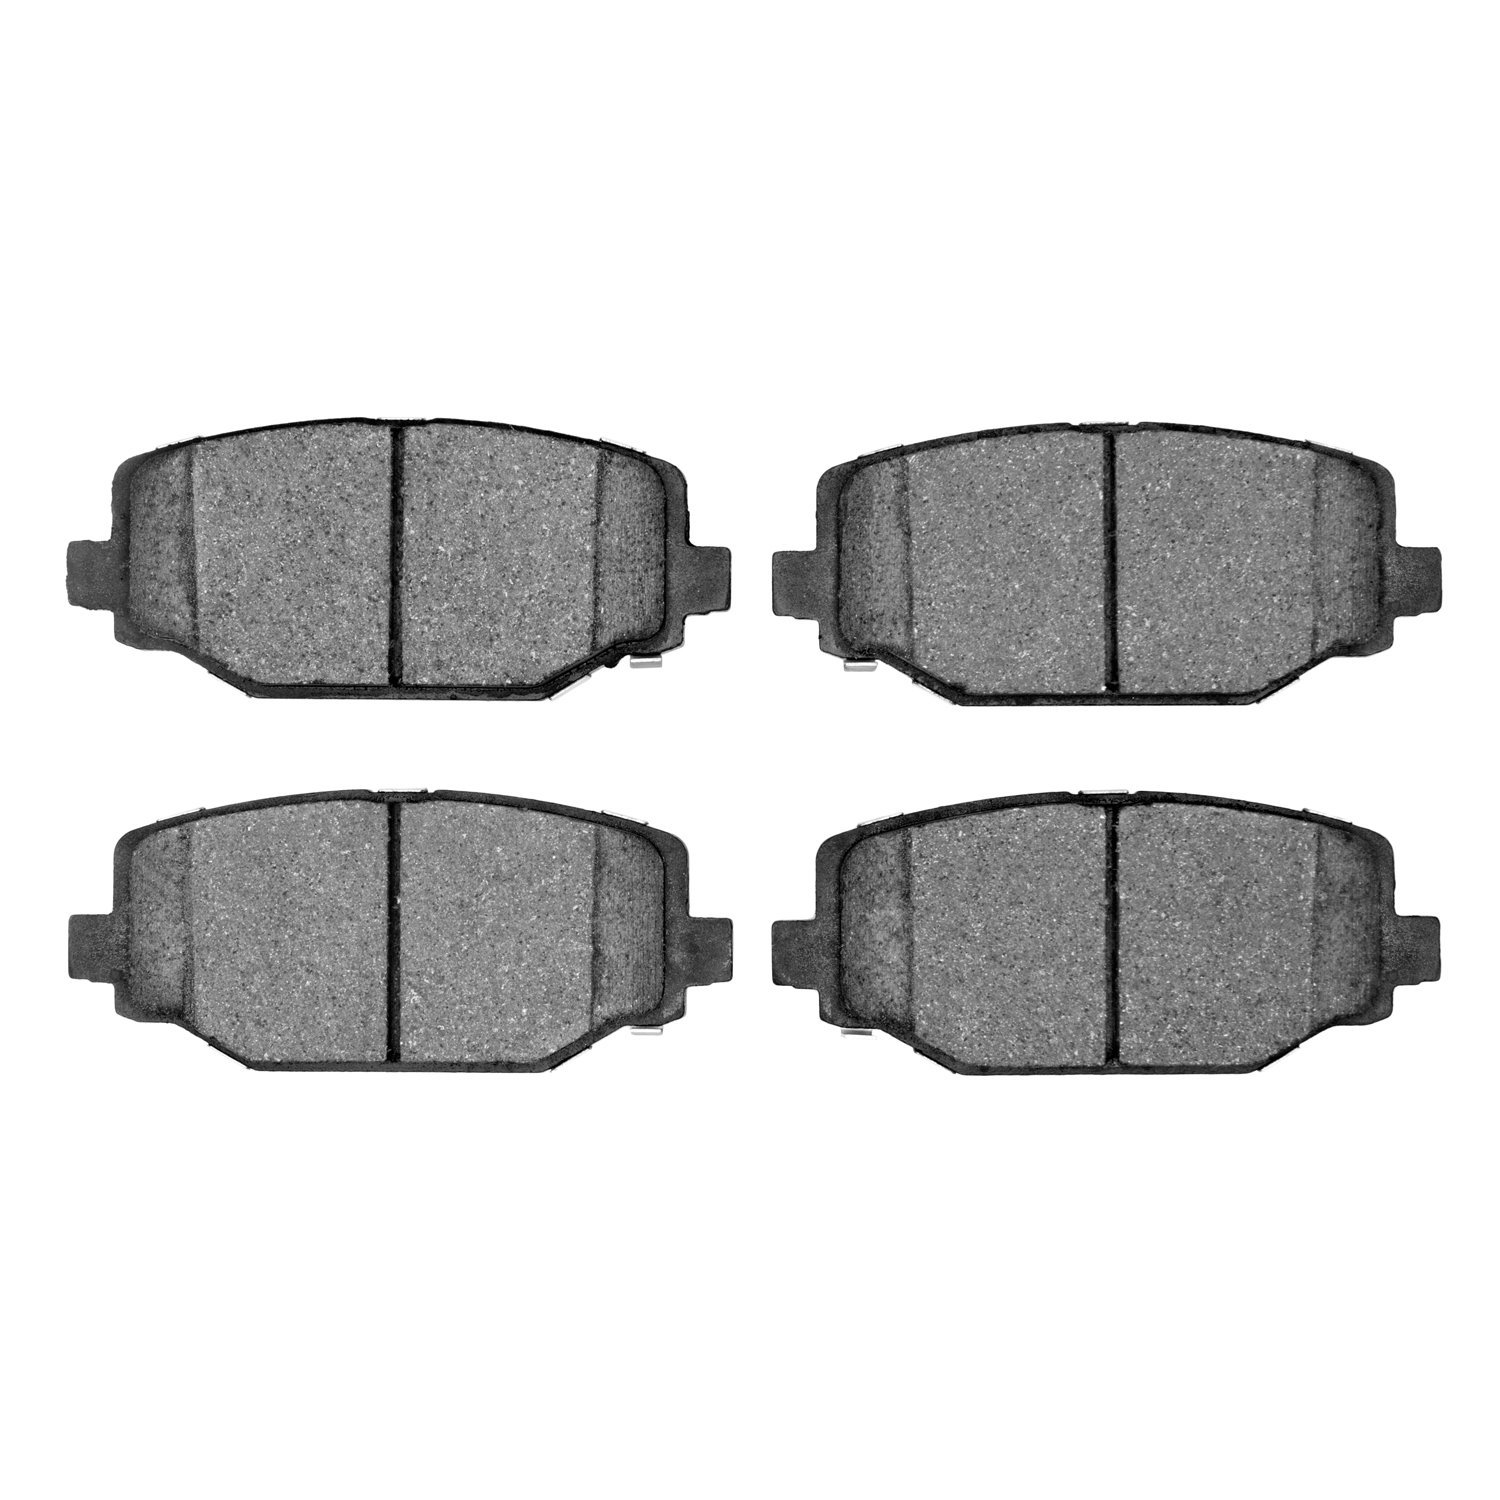 1310-1596-00 3000-Series Ceramic Brake Pads, 2012-2020 Multiple Makes/Models, Position: Rear